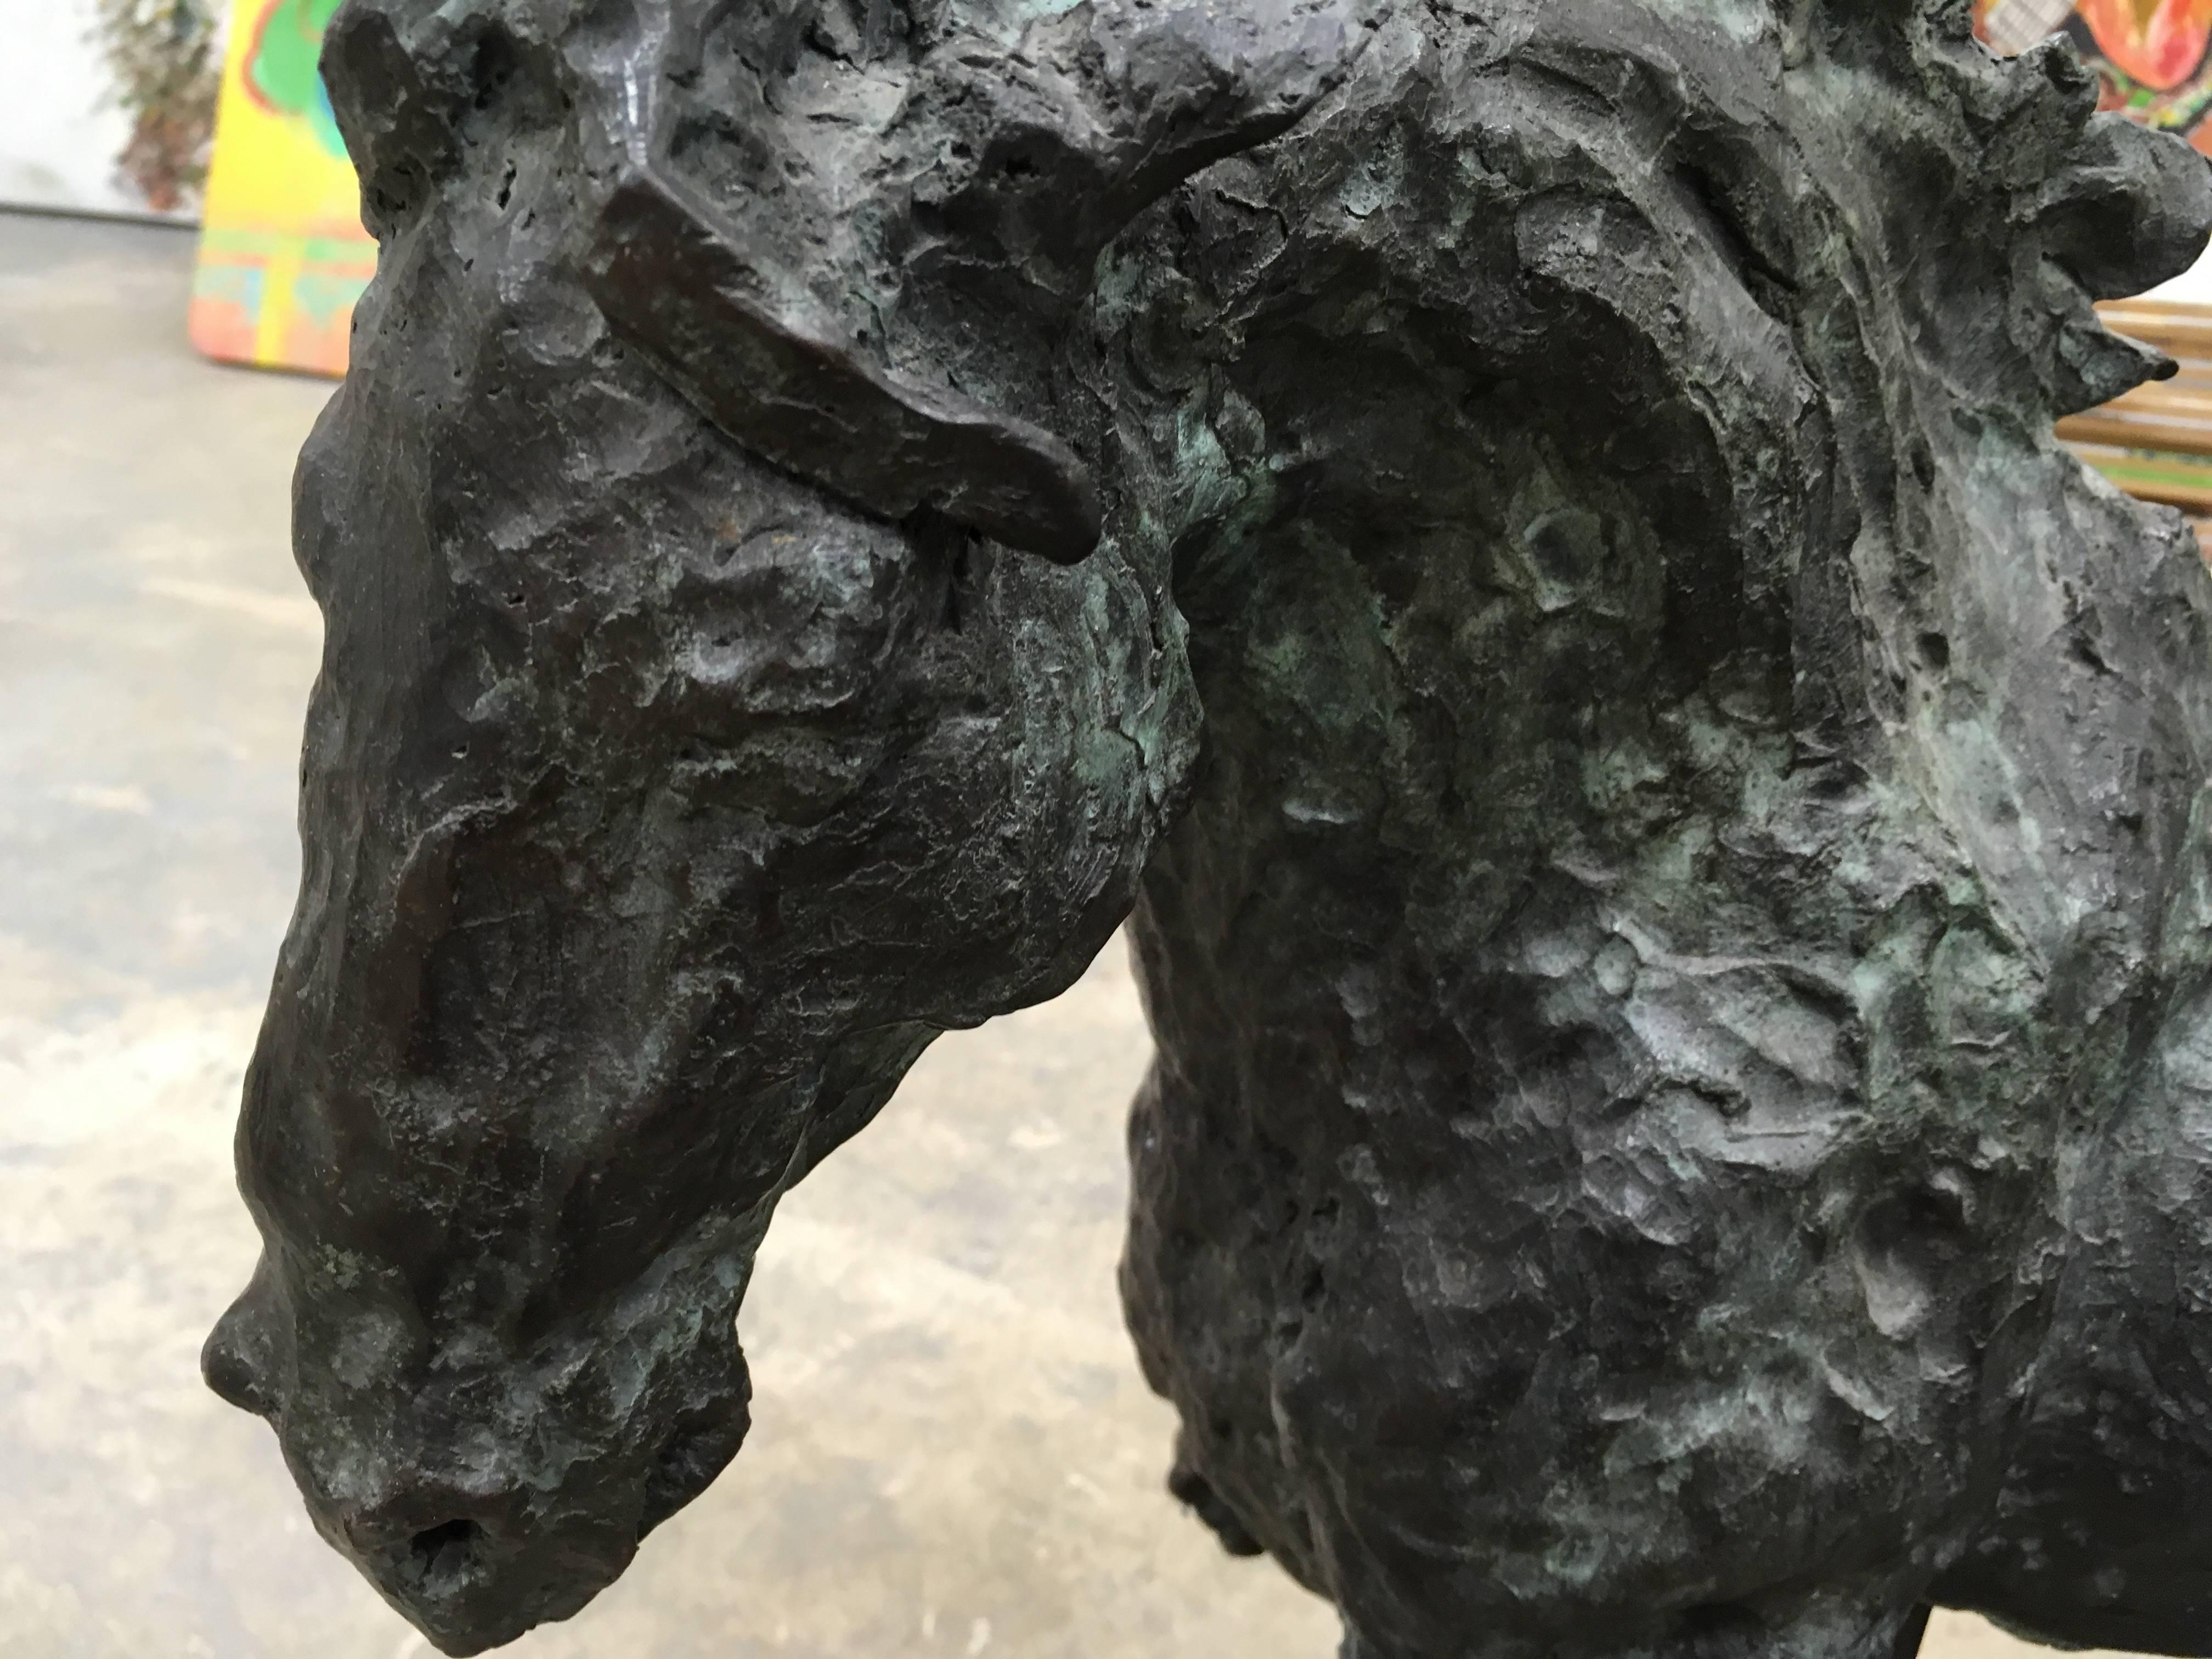 Galloping Horse - Sculpture by Lina Binkele